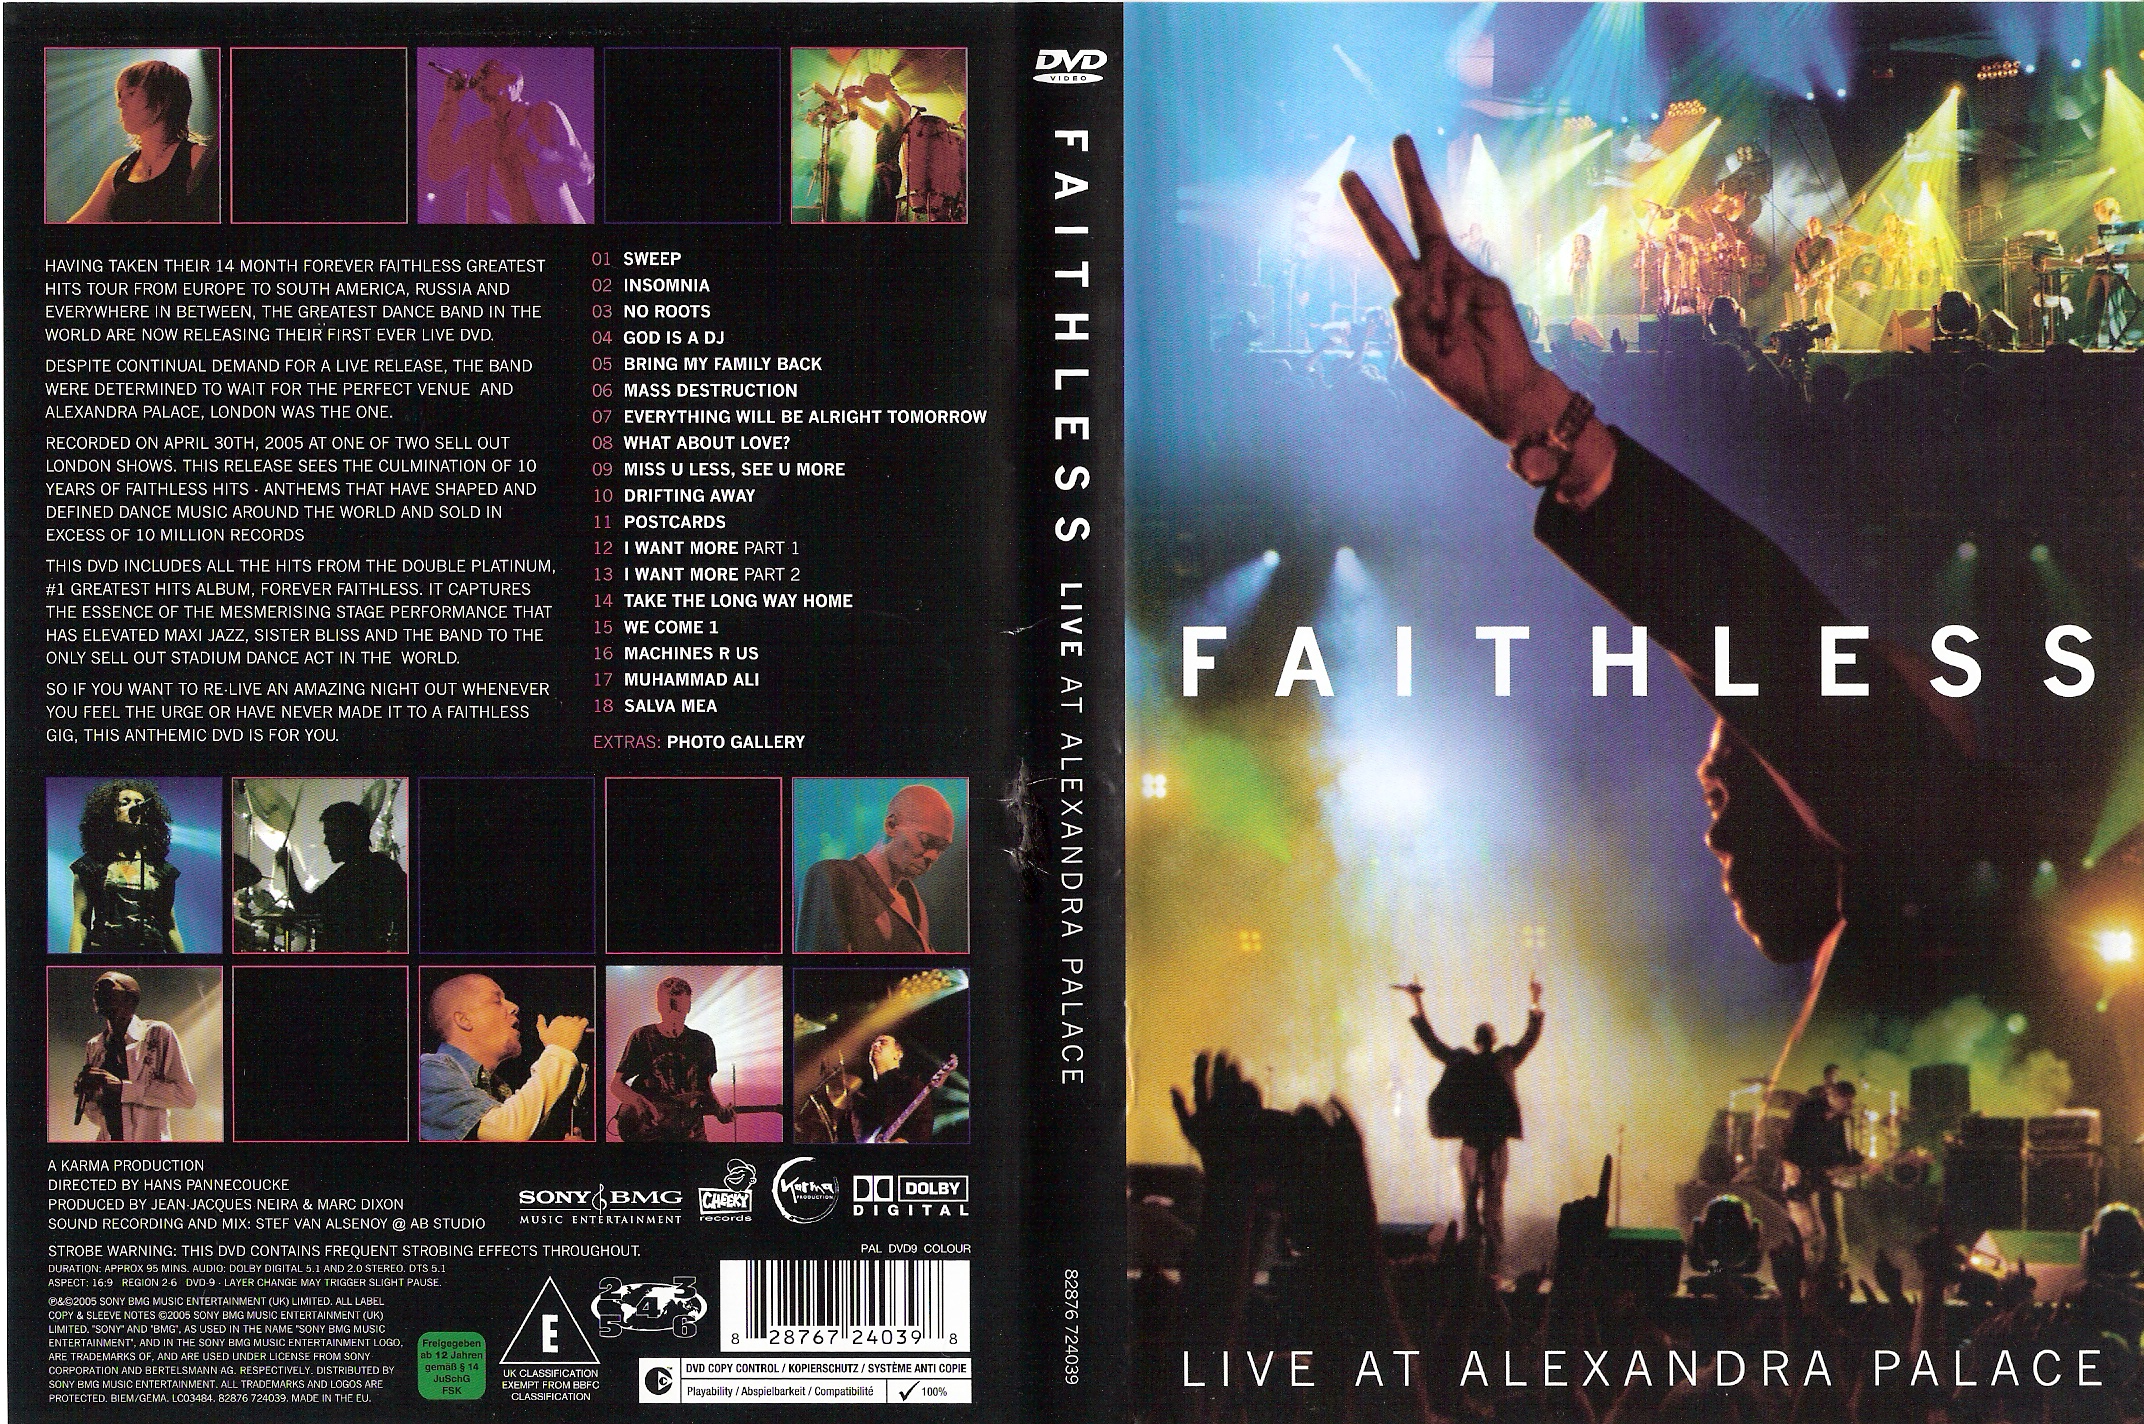 Jaquette DVD Faithless